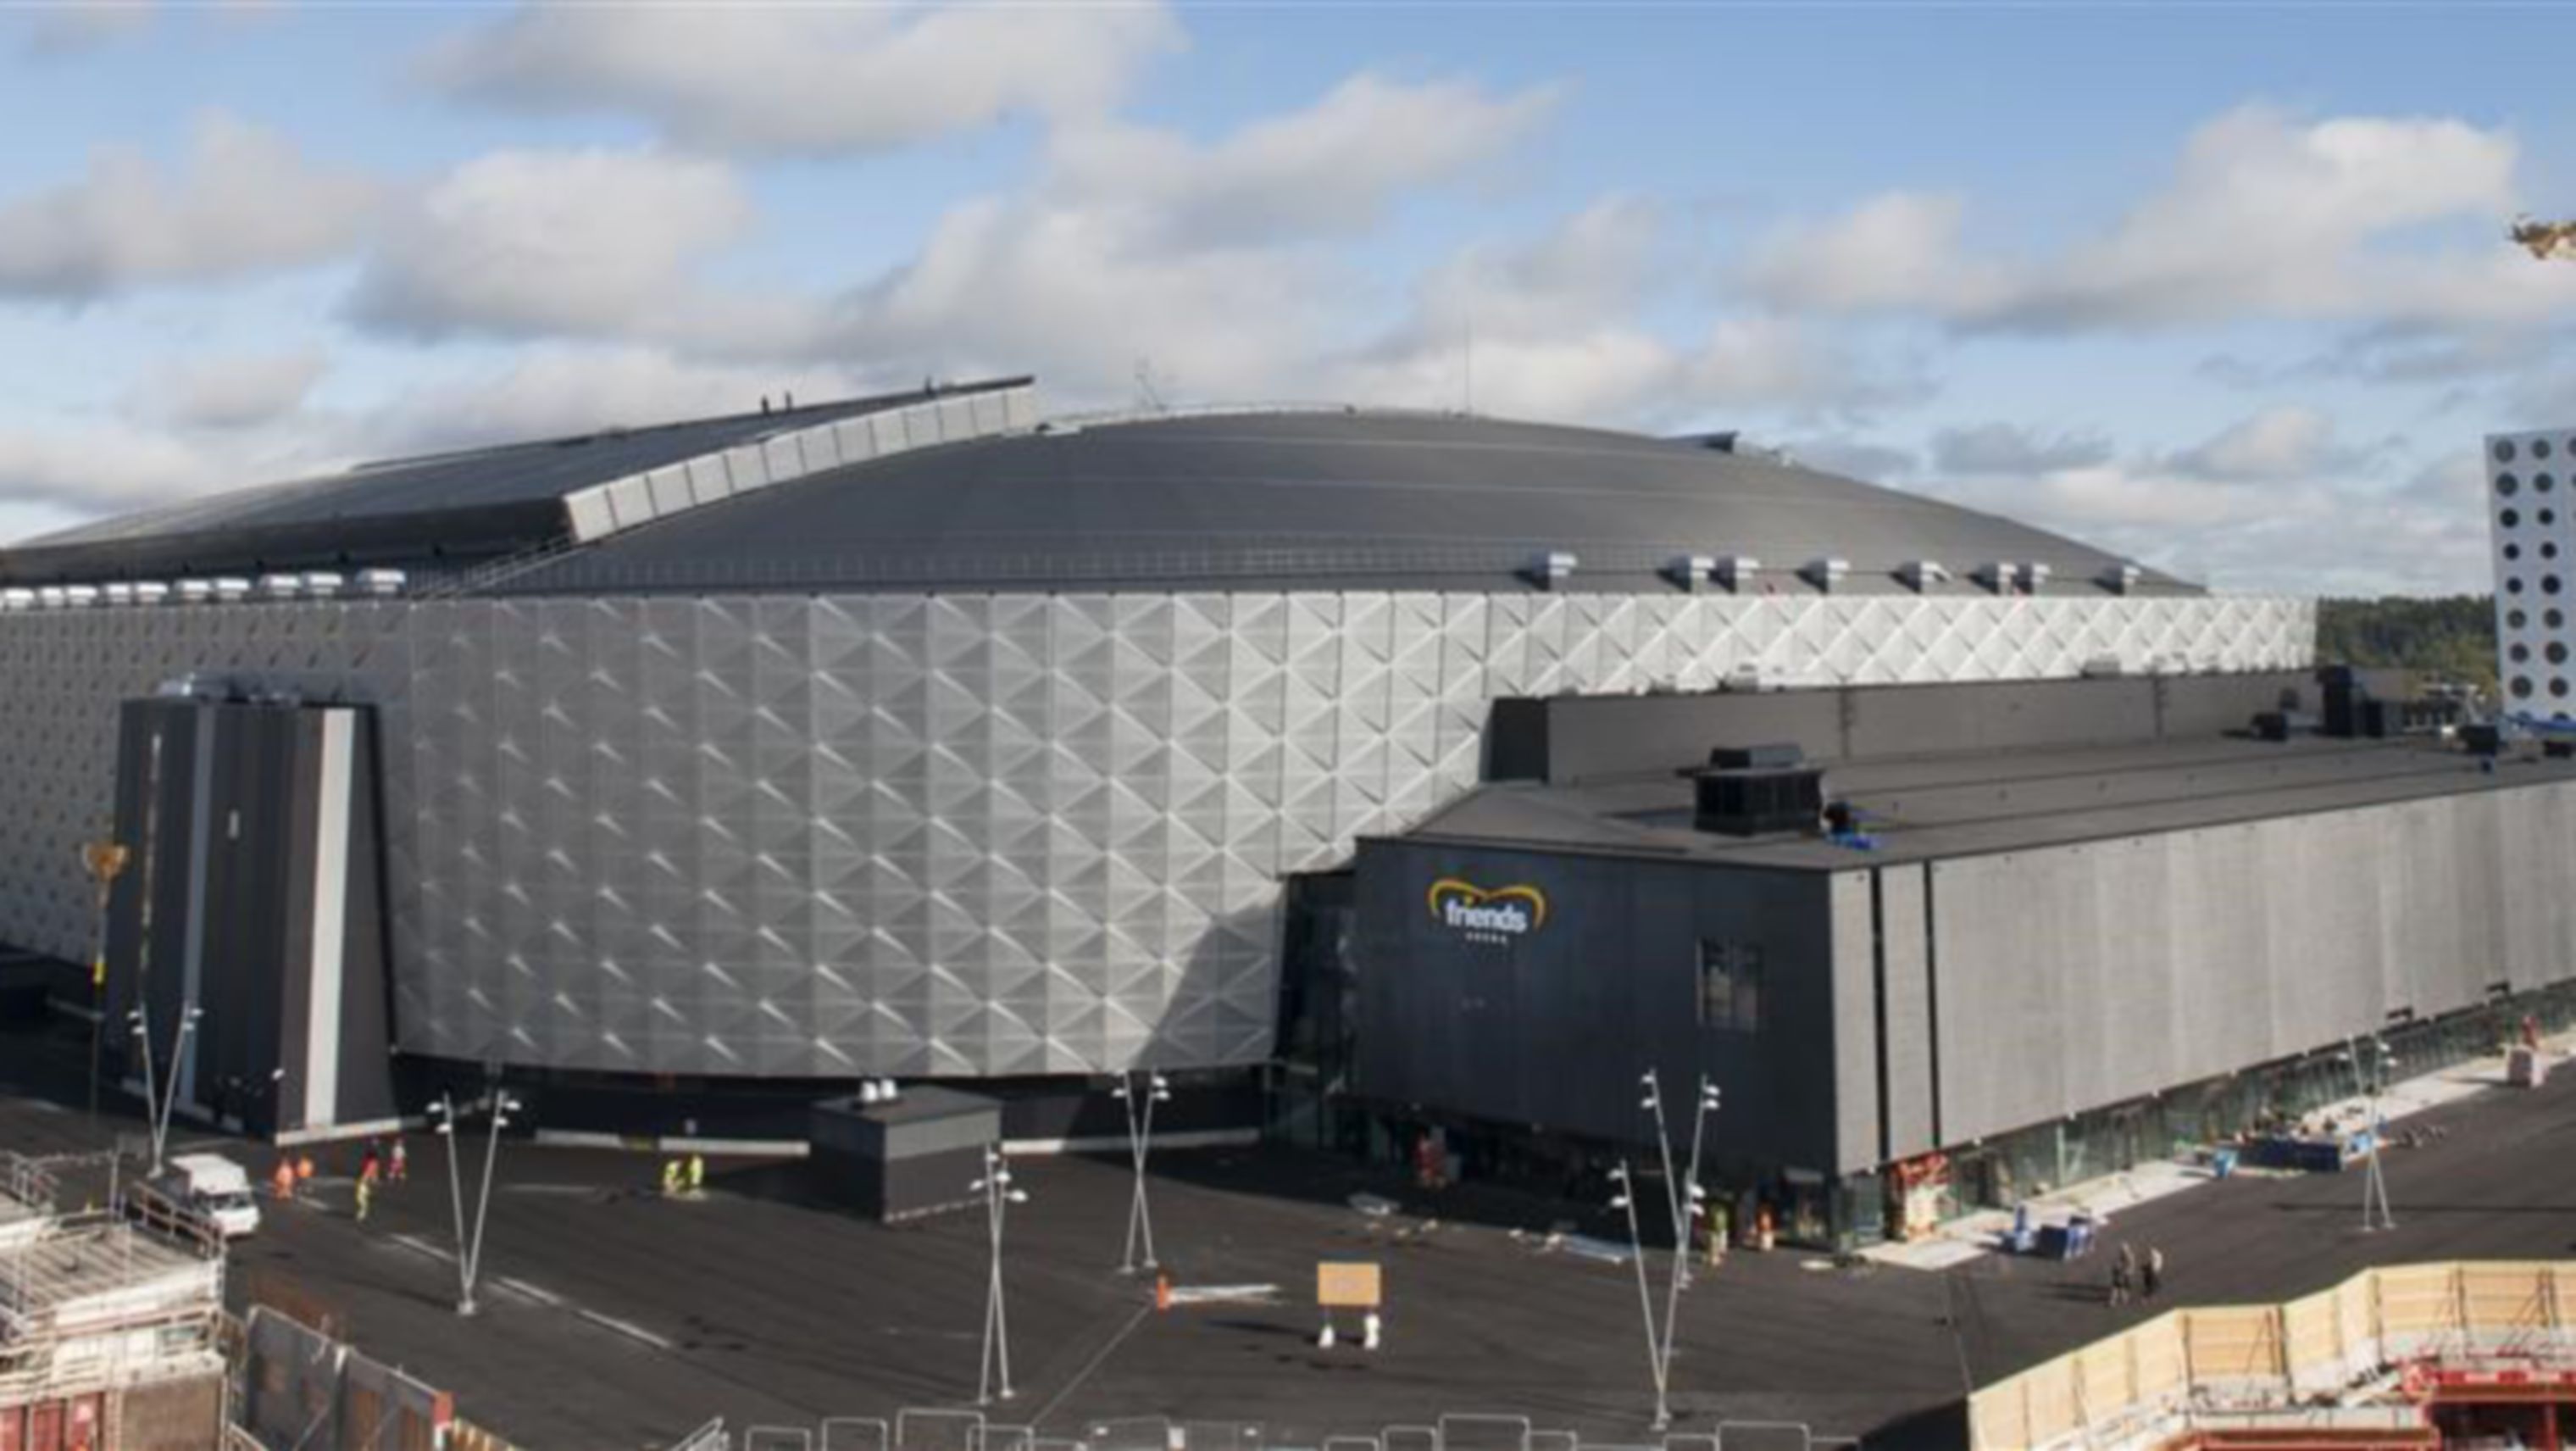 Friends Arena, Sweden